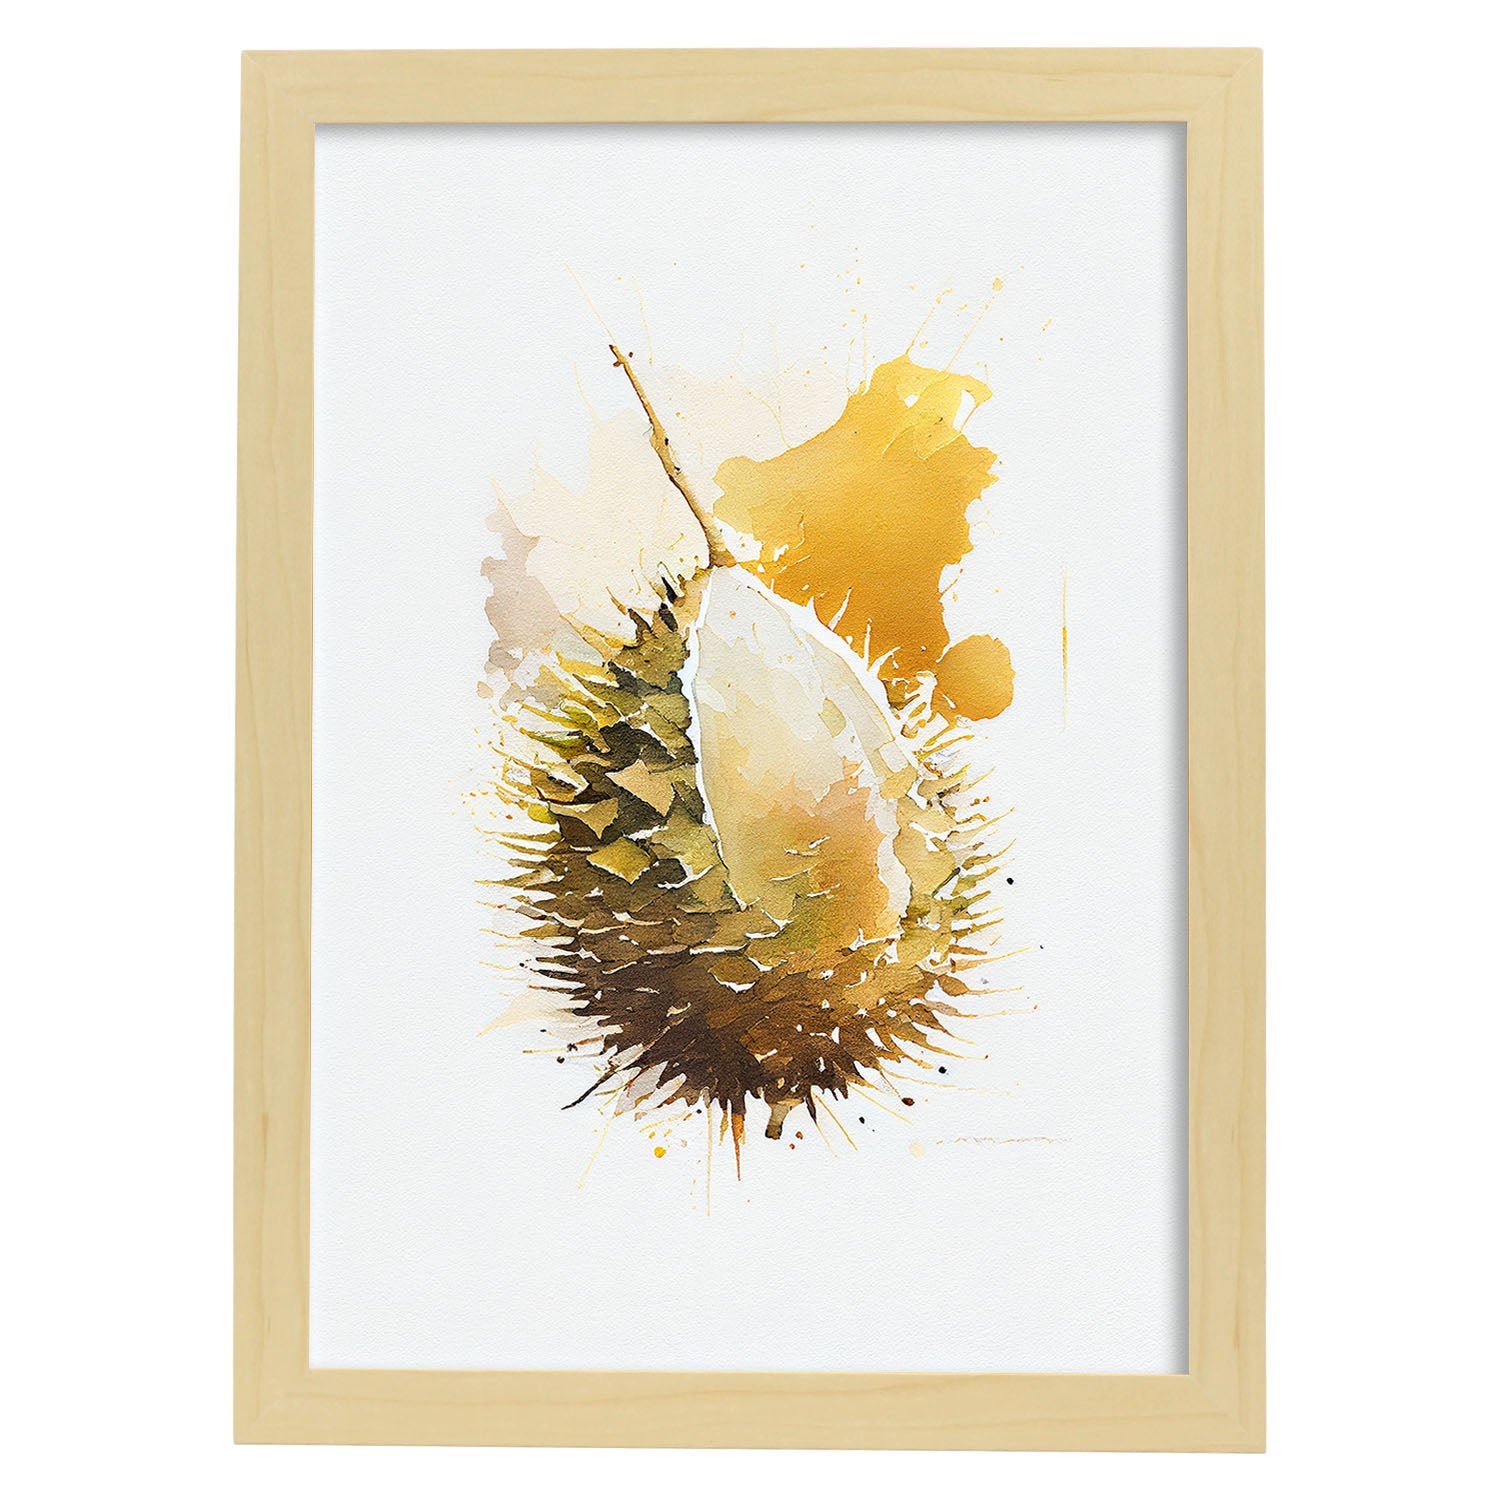 Nacnic minimalist Durian. Aesthetic Wall Art Prints for Bedroom or Living Room Design.-Artwork-Nacnic-A4-Marco Madera Clara-Nacnic Estudio SL